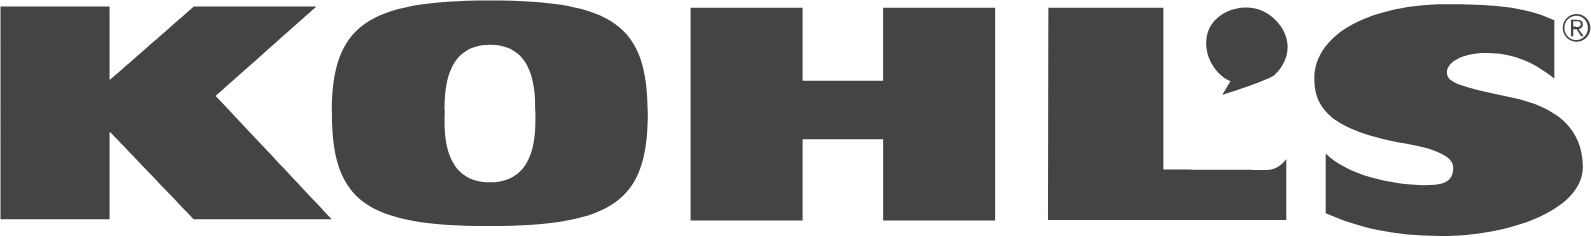 Kohls Logo PNG Image File